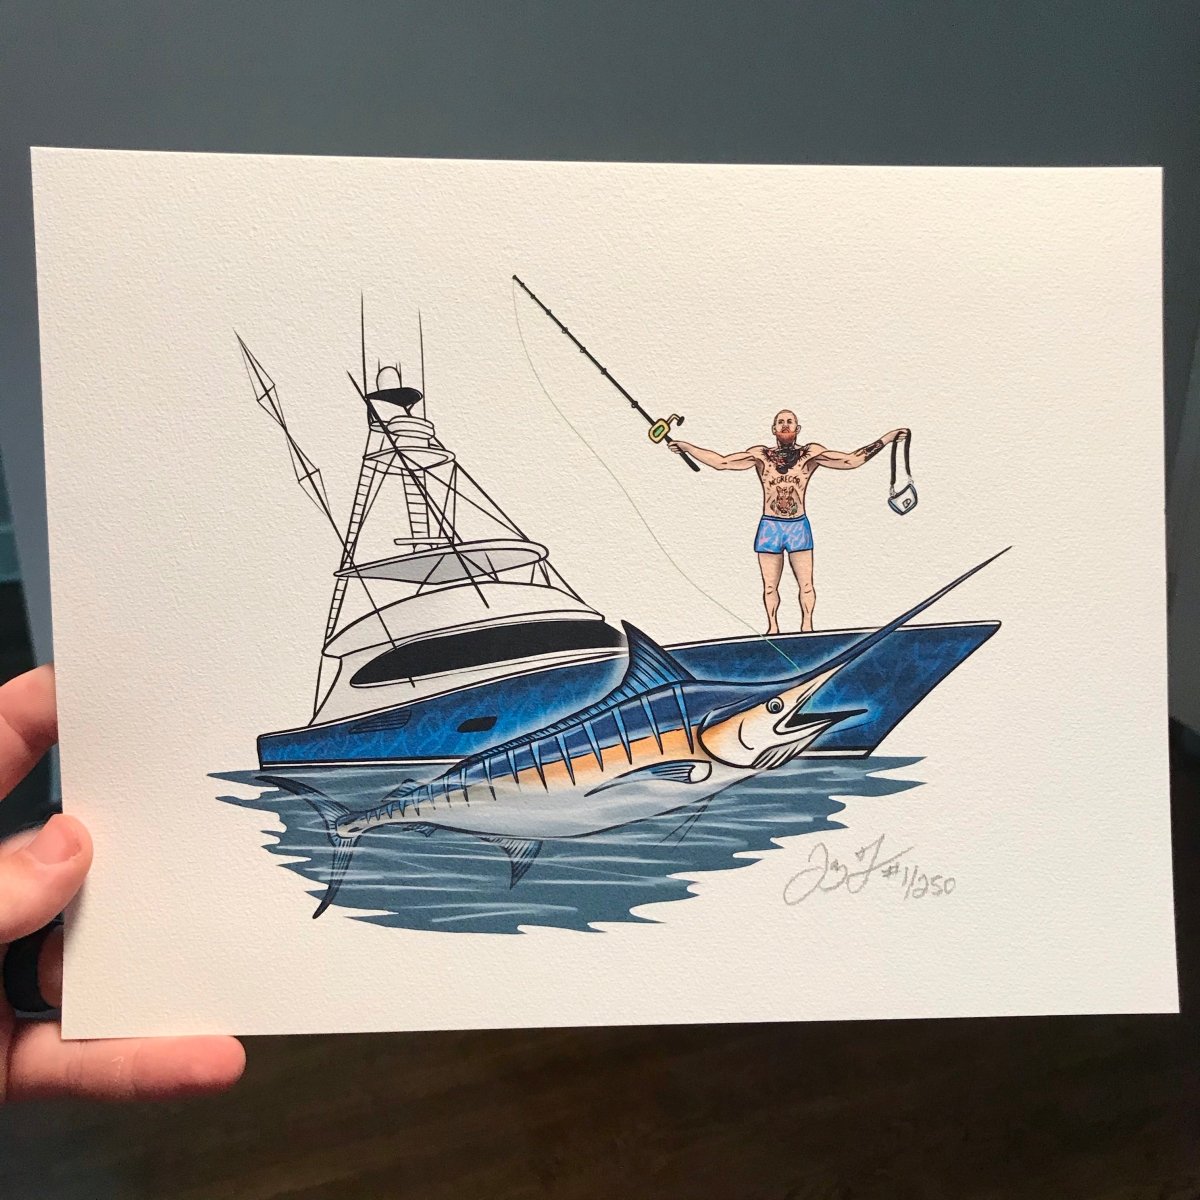 Conor Mcgregor “I am fishing” Print - Jaybo Art